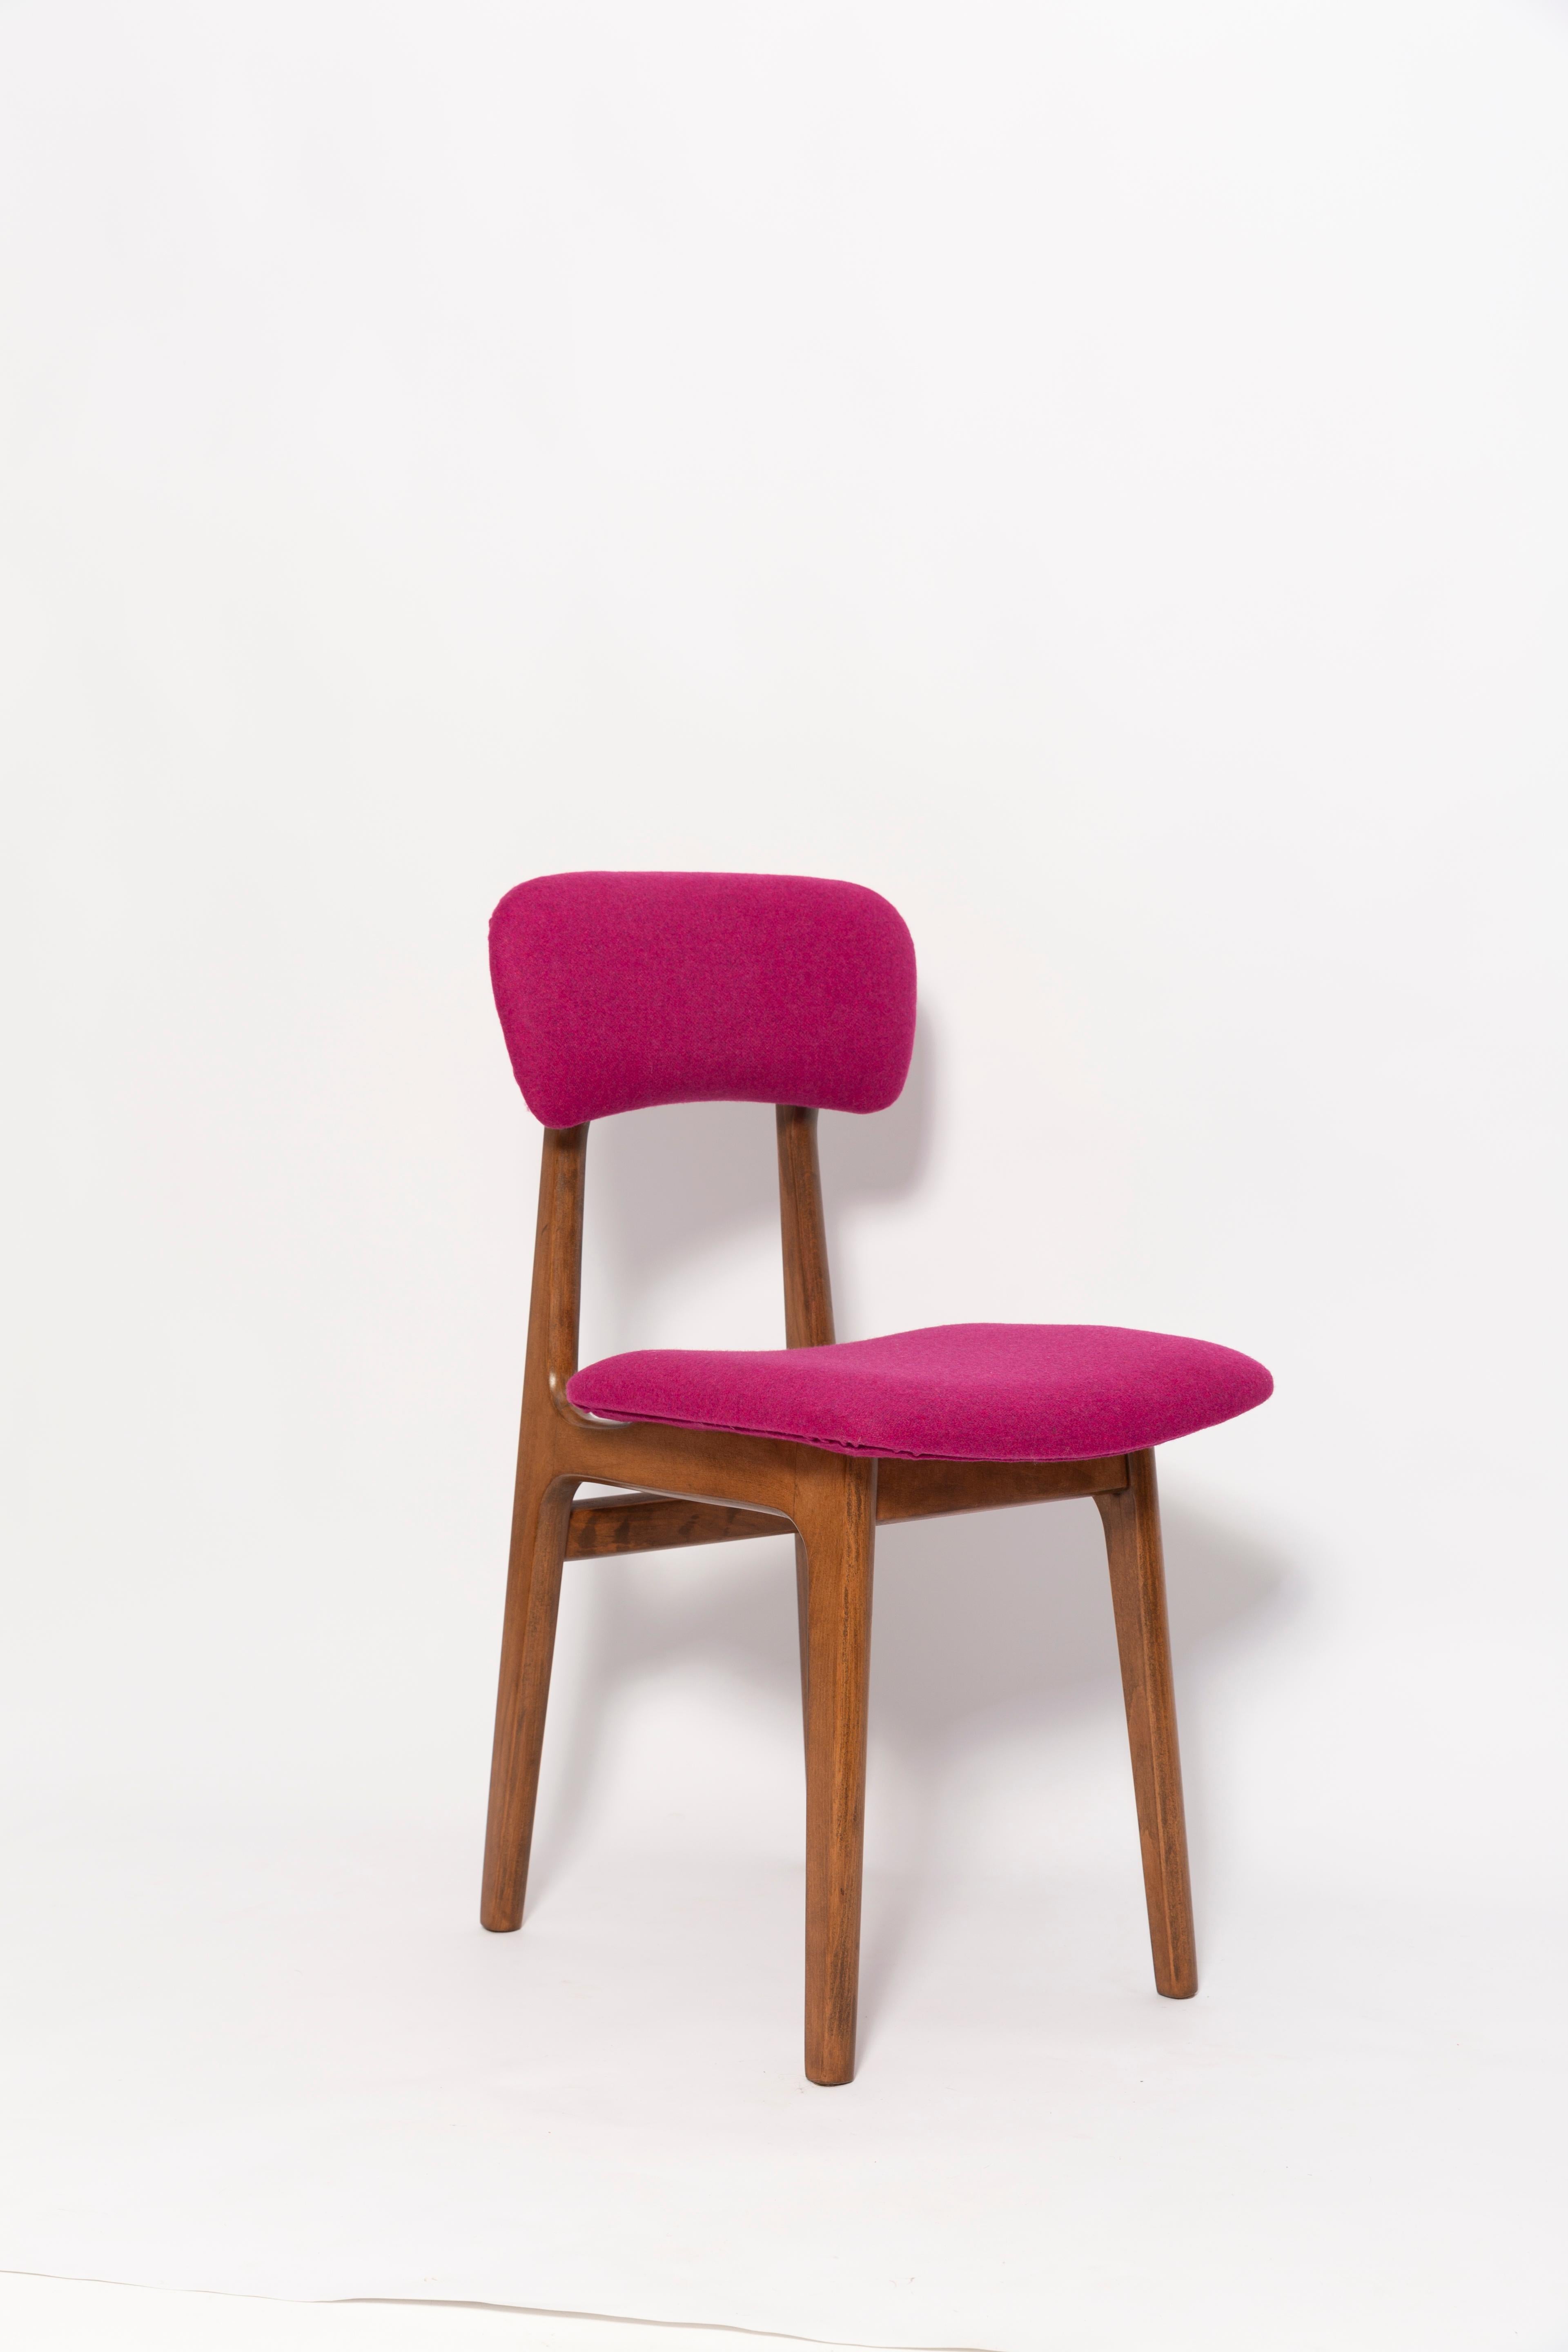 Mid-Century Modern Mid Century Fuchsia Pink Wool Chair, Walnut Wood, Rajmund Halas, Europe, 1960s For Sale